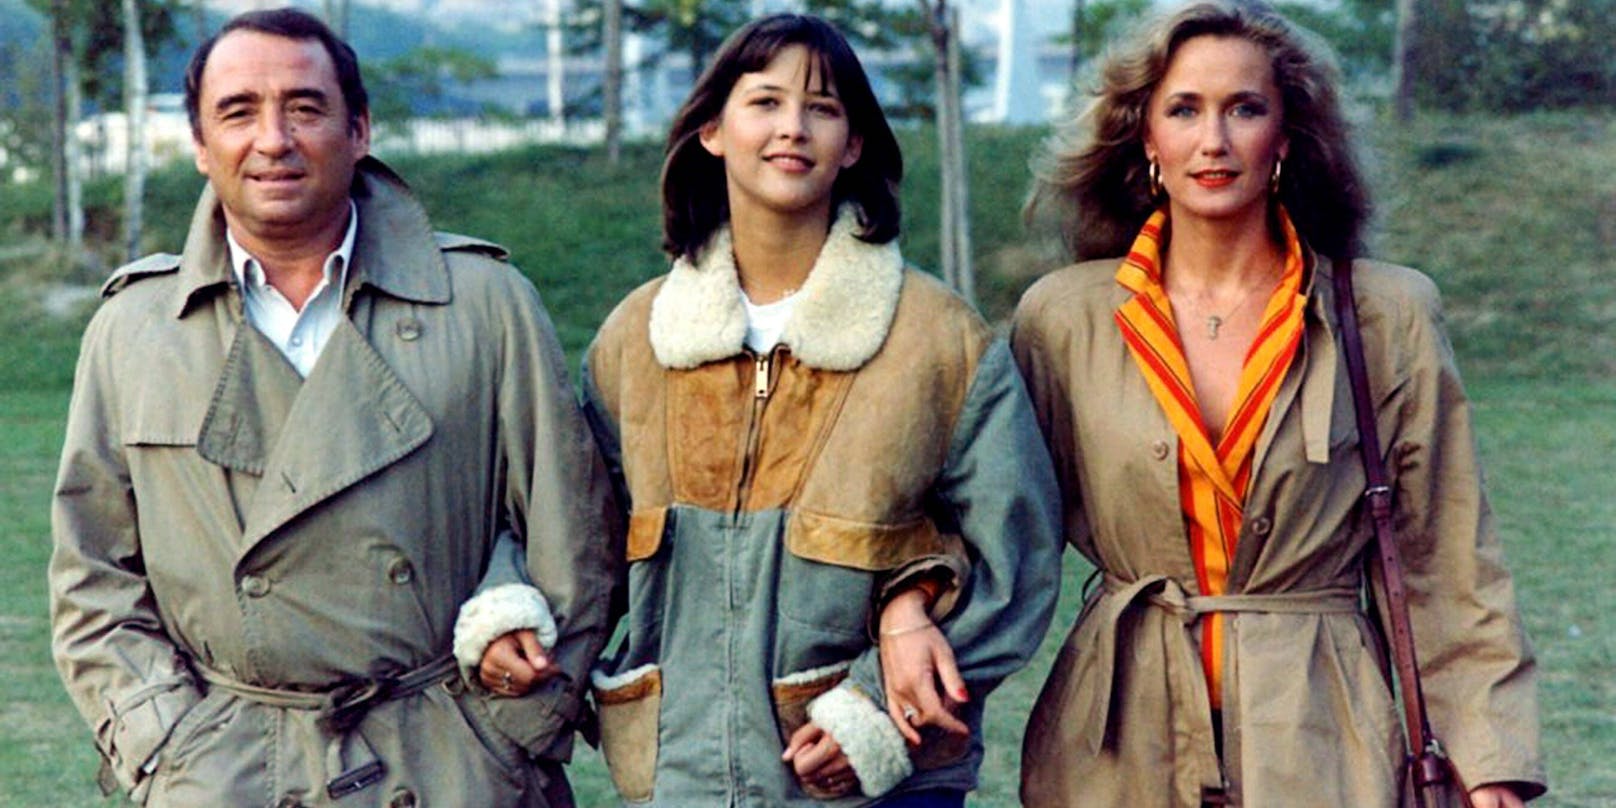 Claude Brasseur, Sophie Marceau und Brigitte Fossey in "La Boum 2"